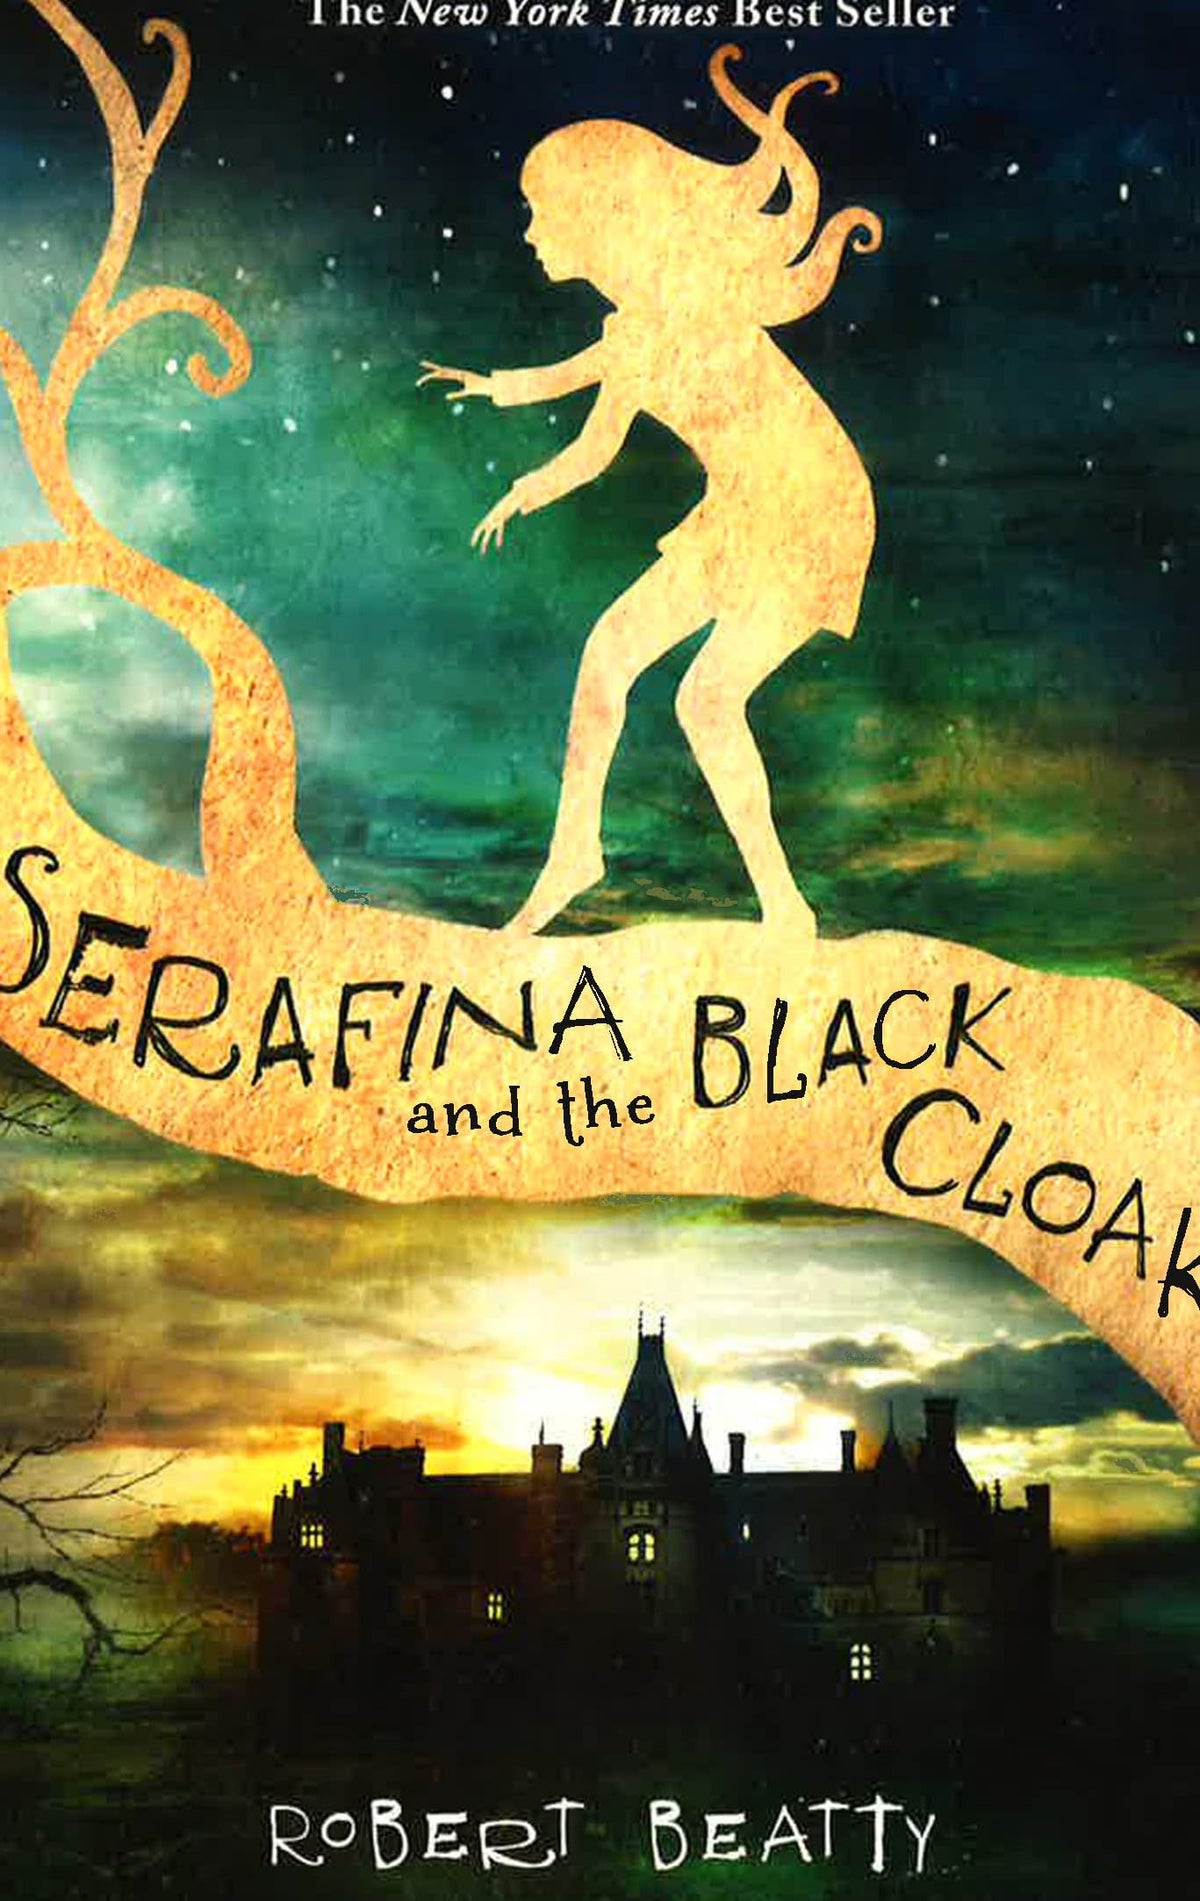 serafina from serafina and the black cloak